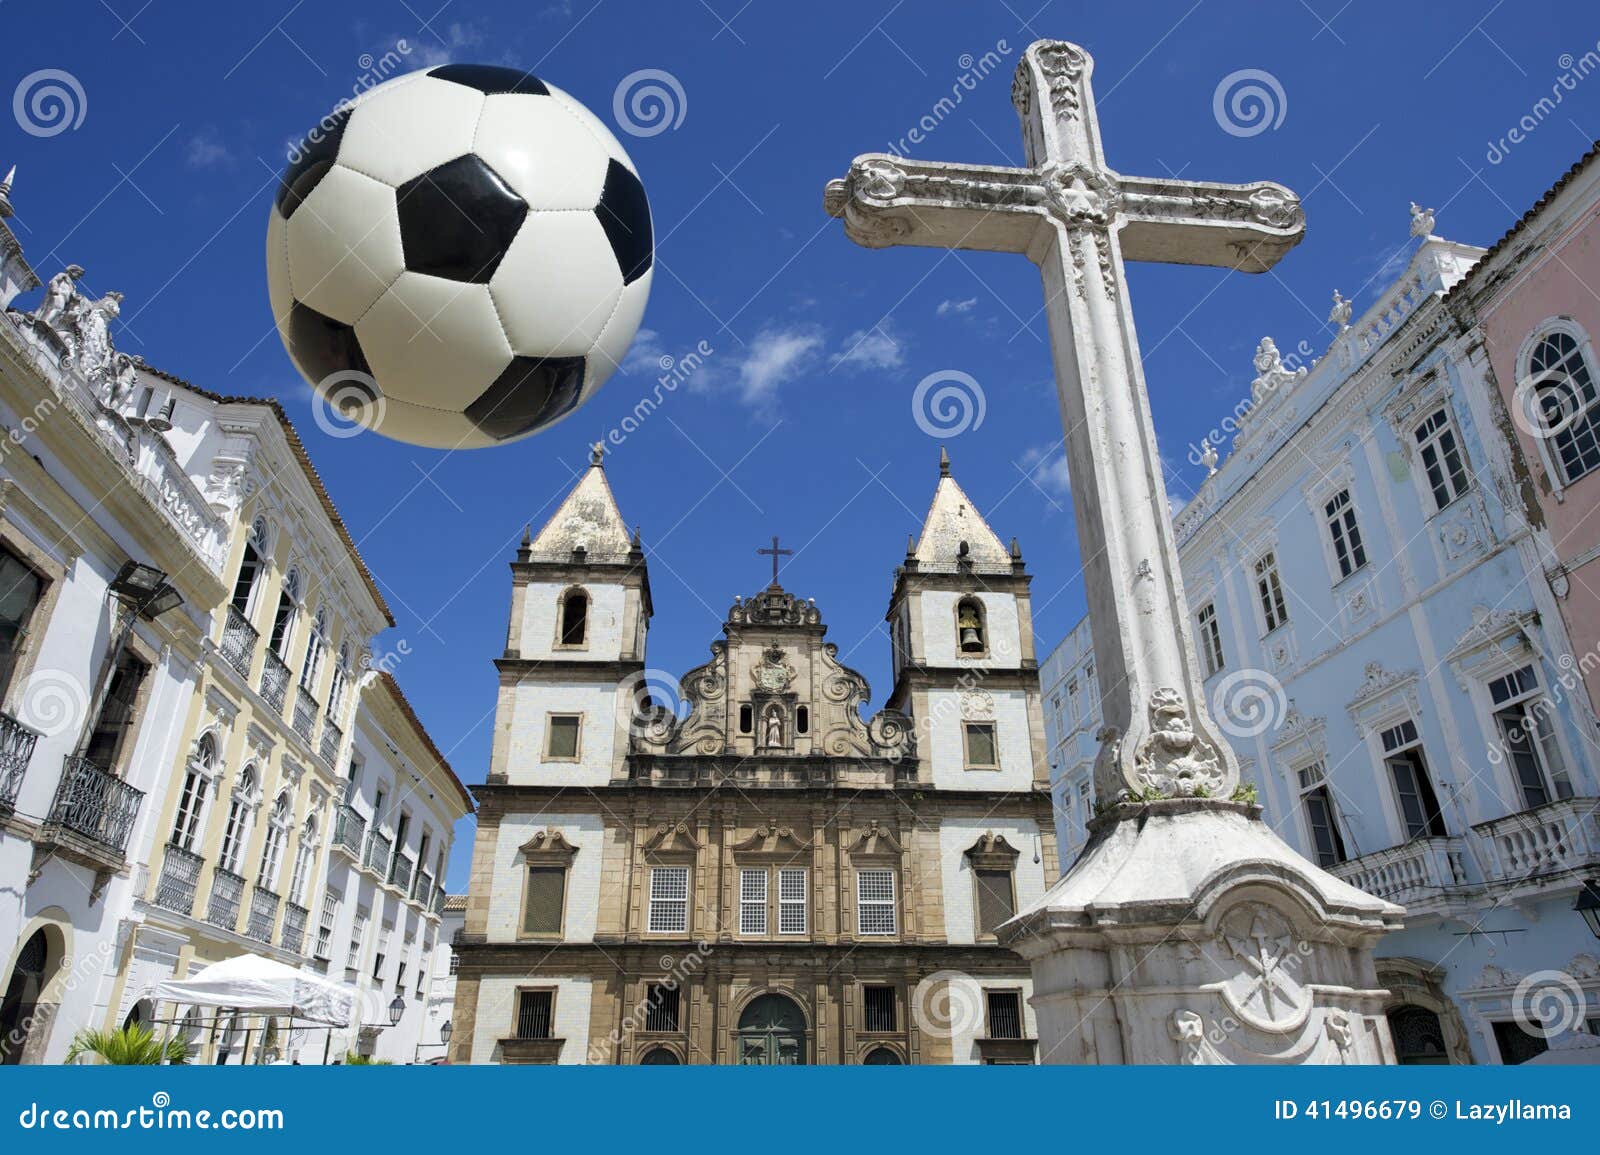 football at colonial christian cross in pelourinho salvador bahia brazil